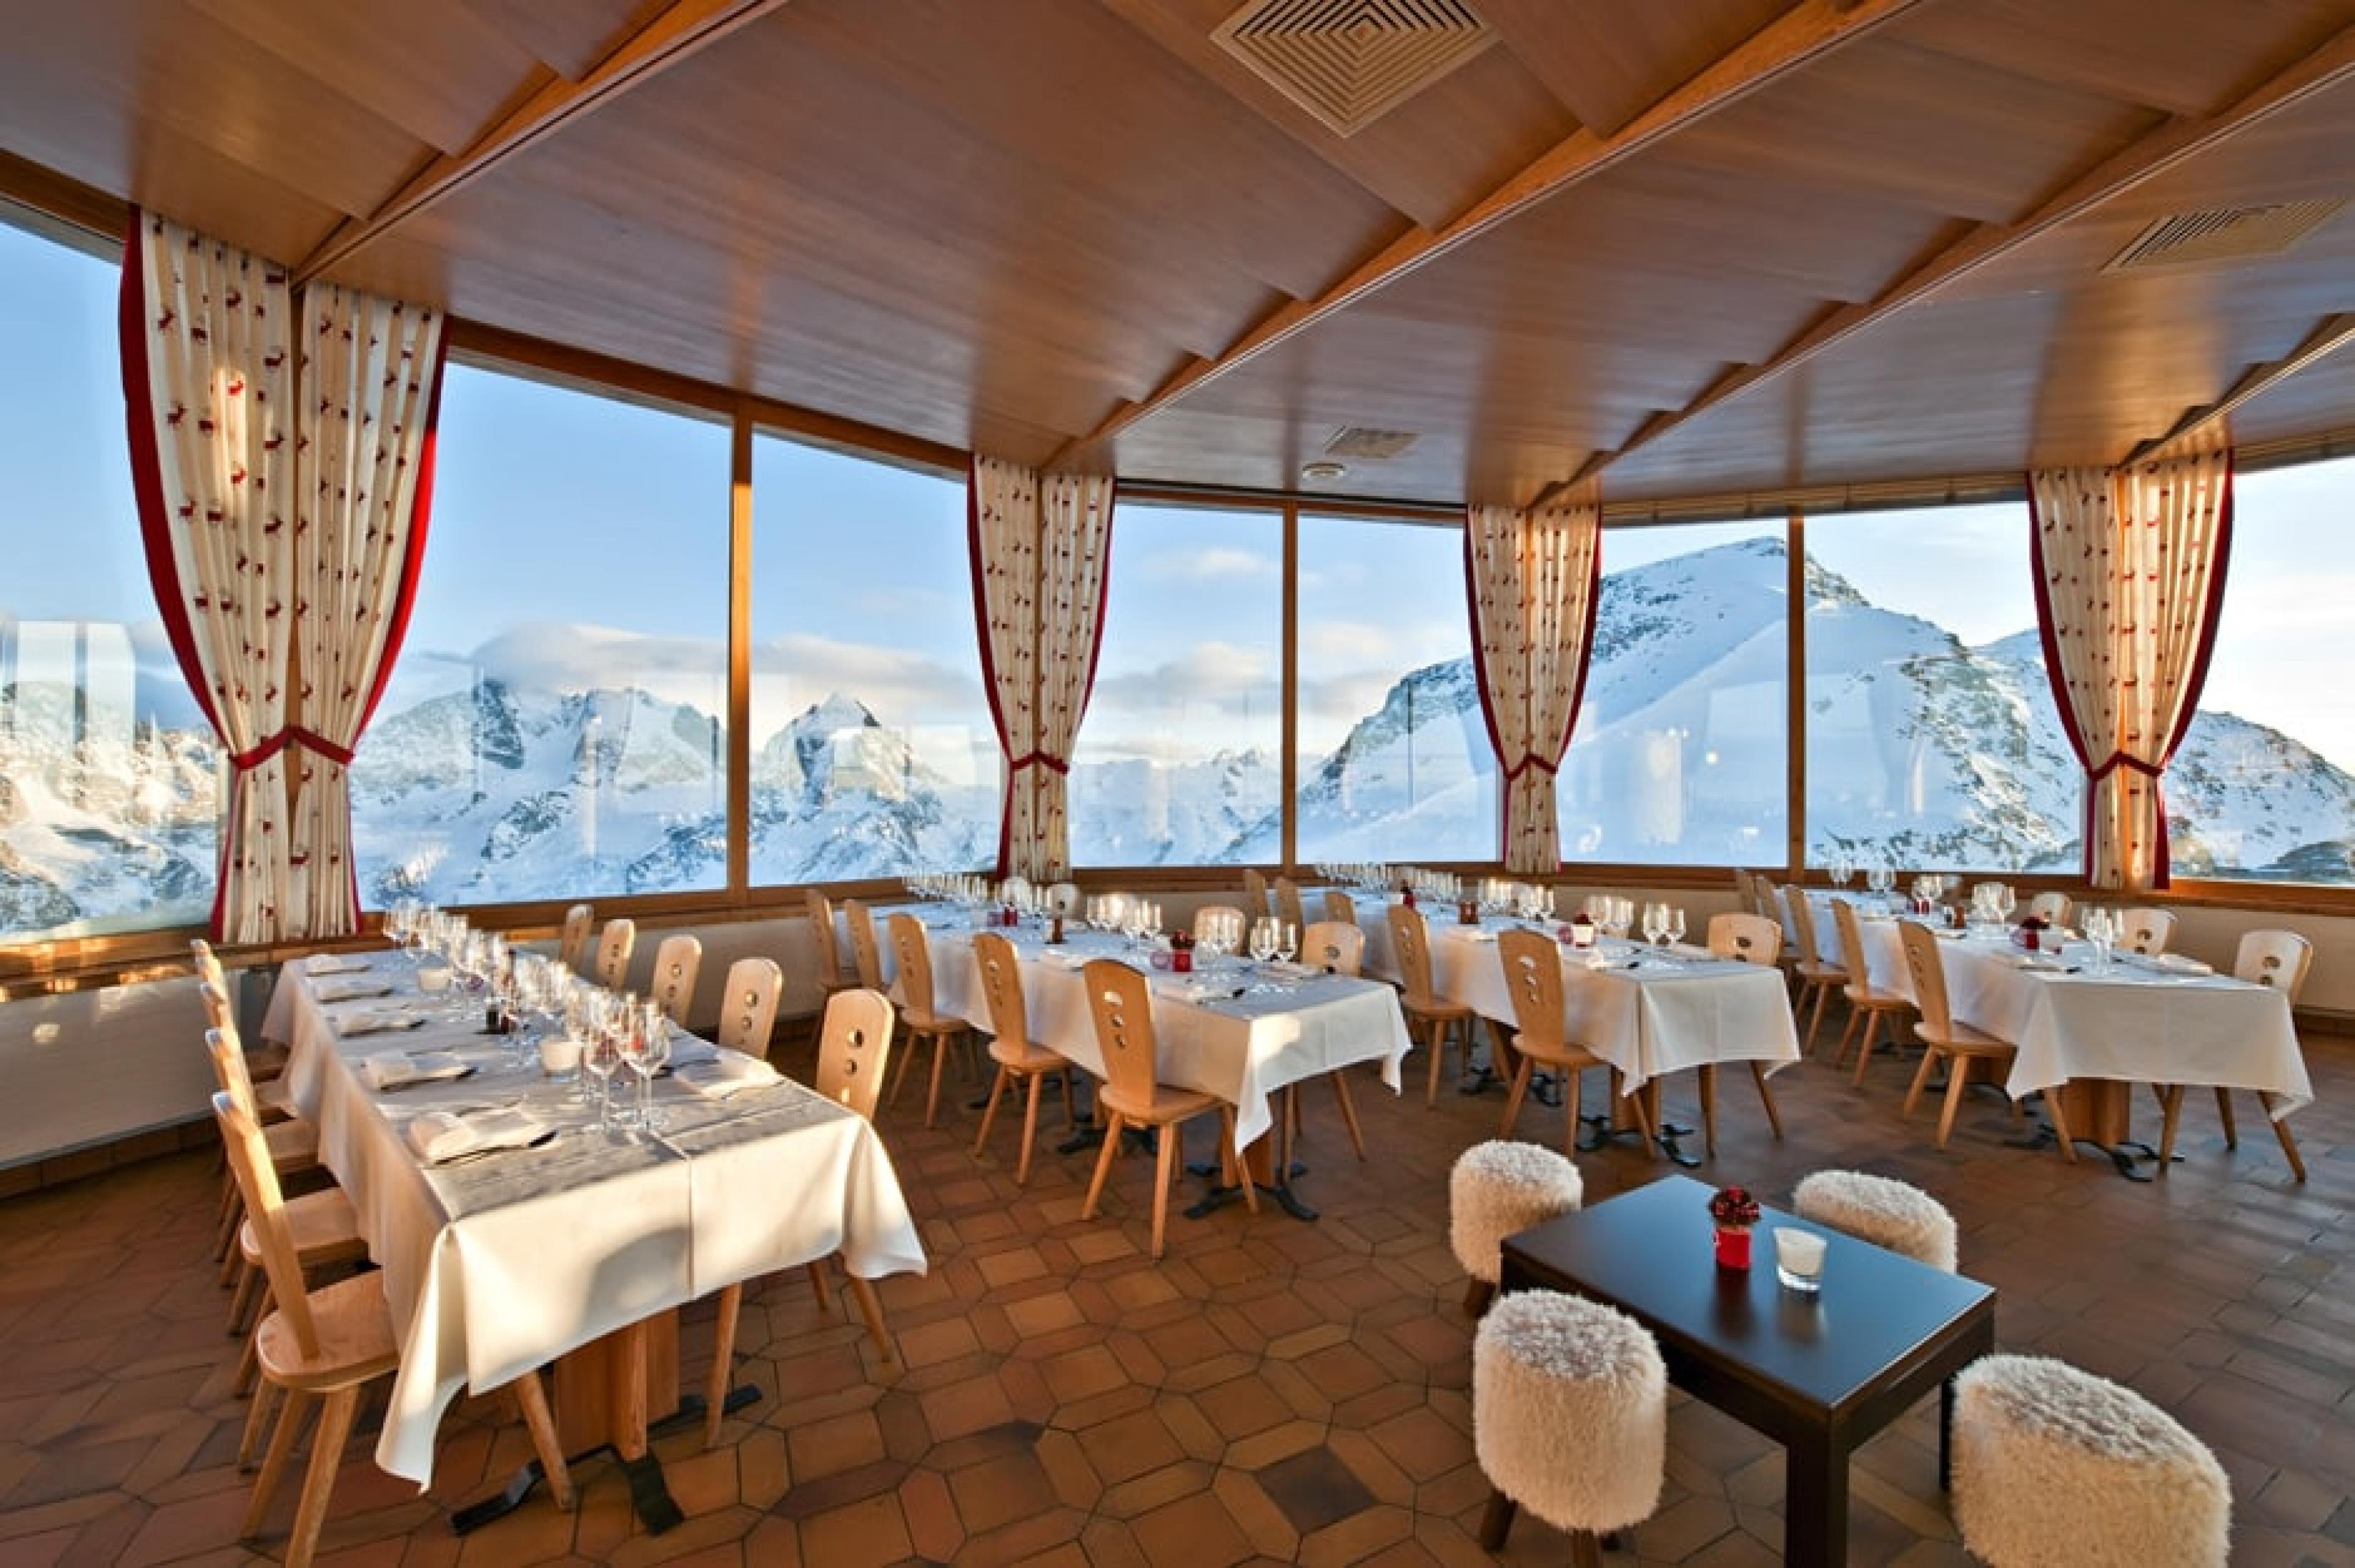 Dinning Area at  Corvatsch Panorama Restaurant,  Engadin & St. Moritz, Switzerland